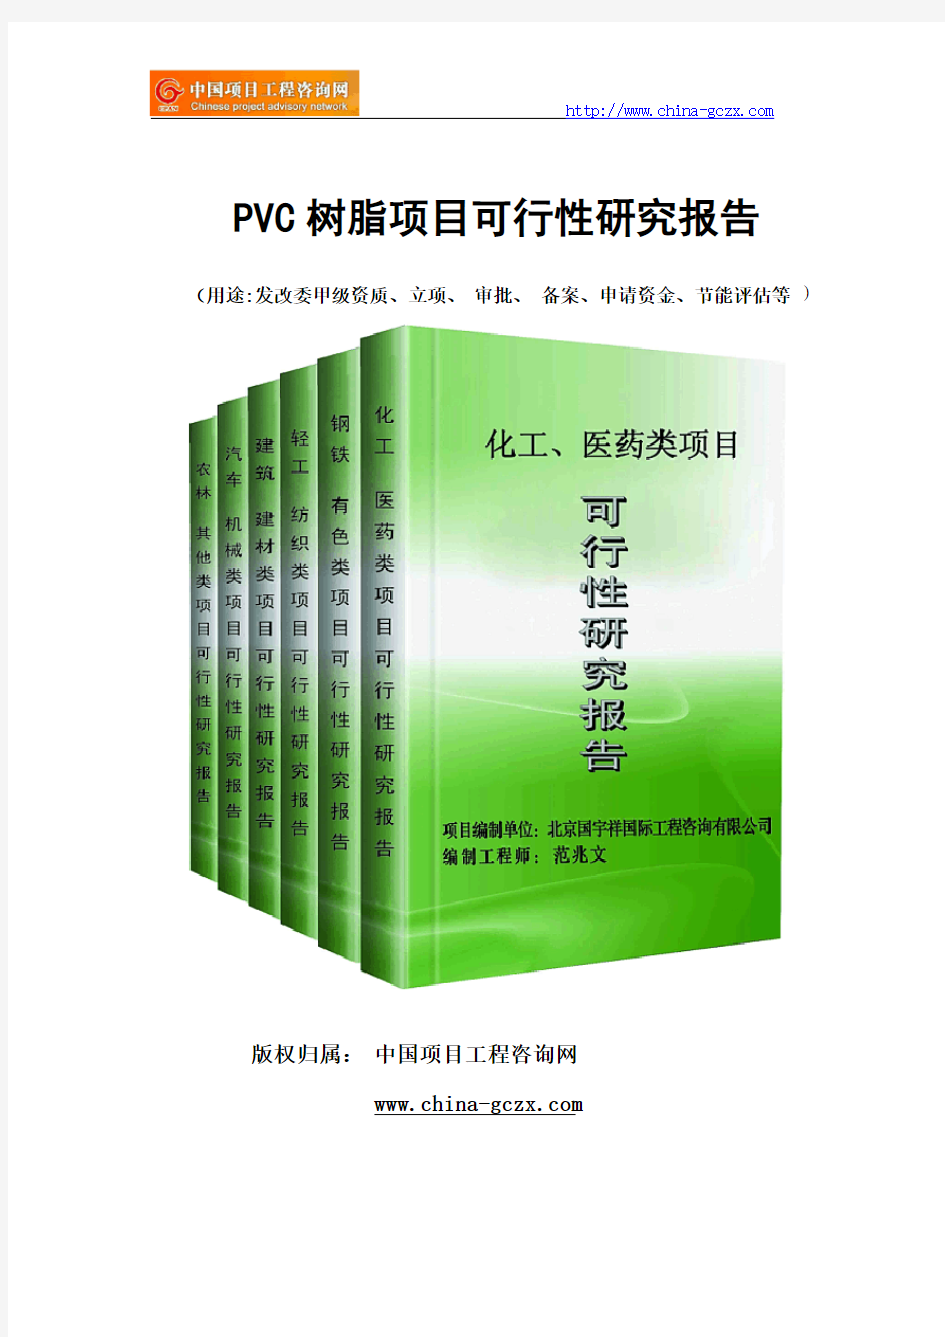 PVC树脂项目可行性研究报告范文格式(专业经典案例)